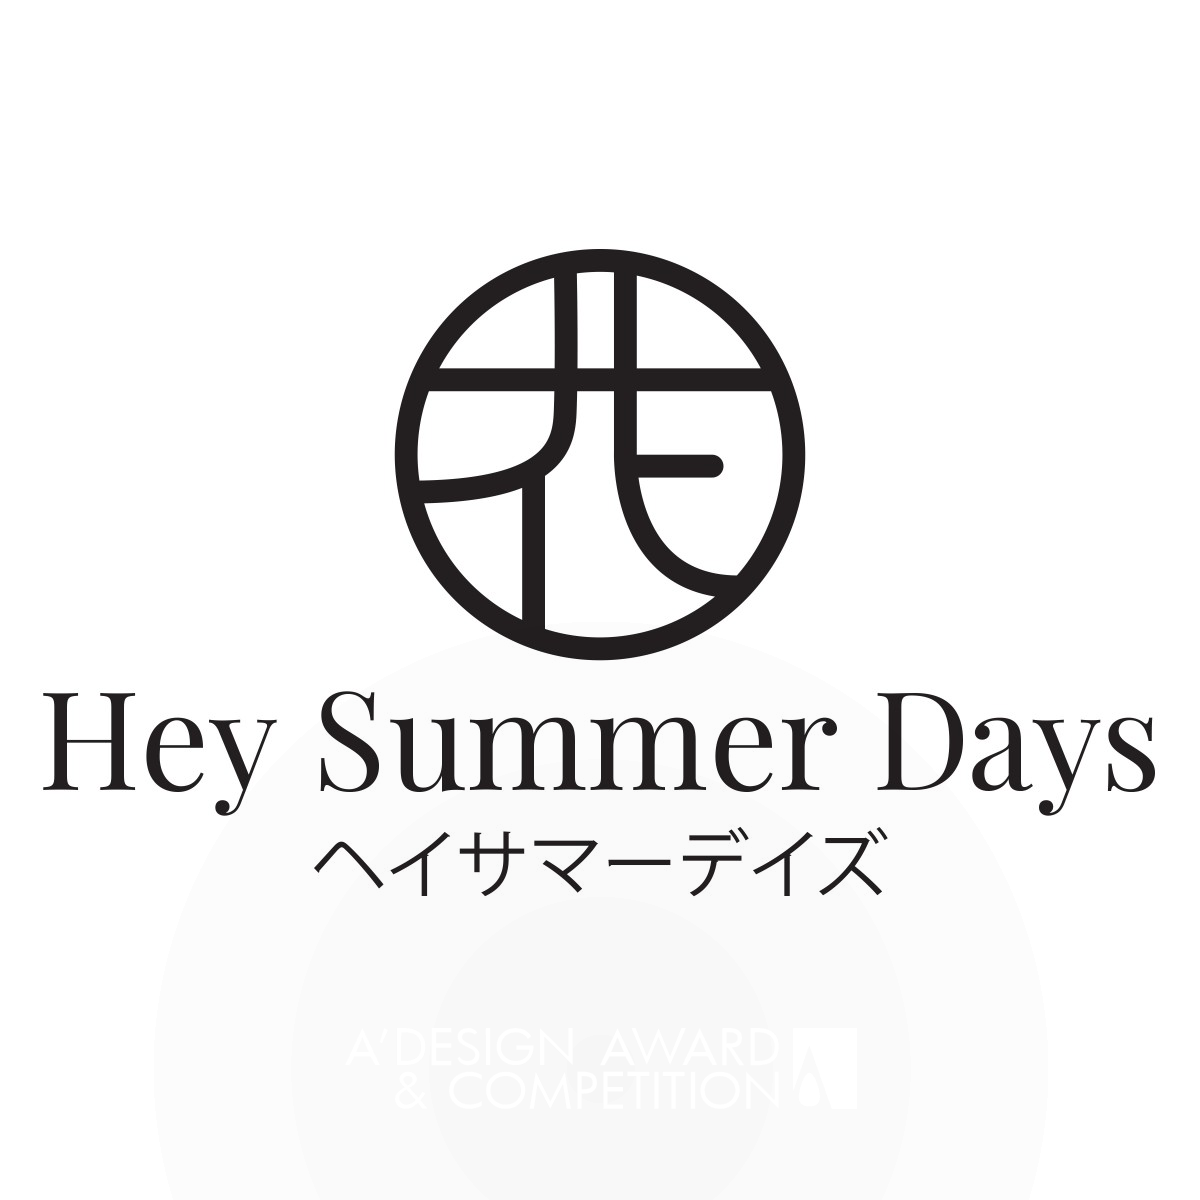 Hey Summer Days Logo Design <b>Logo Design